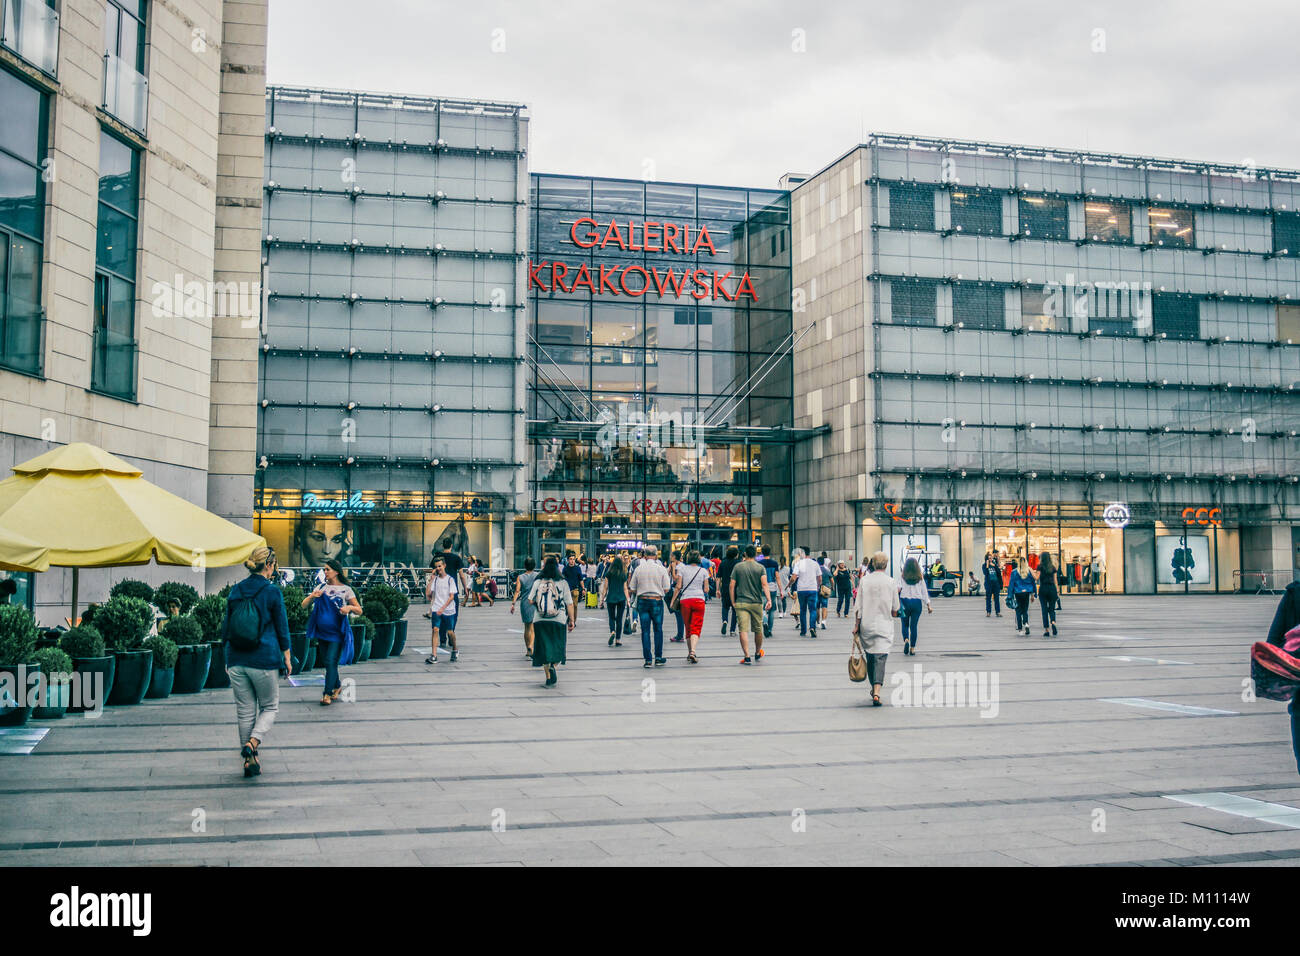 People walking on the square next to the Galeria Krakowska shopping center in Krakow, Poland Stock Photo